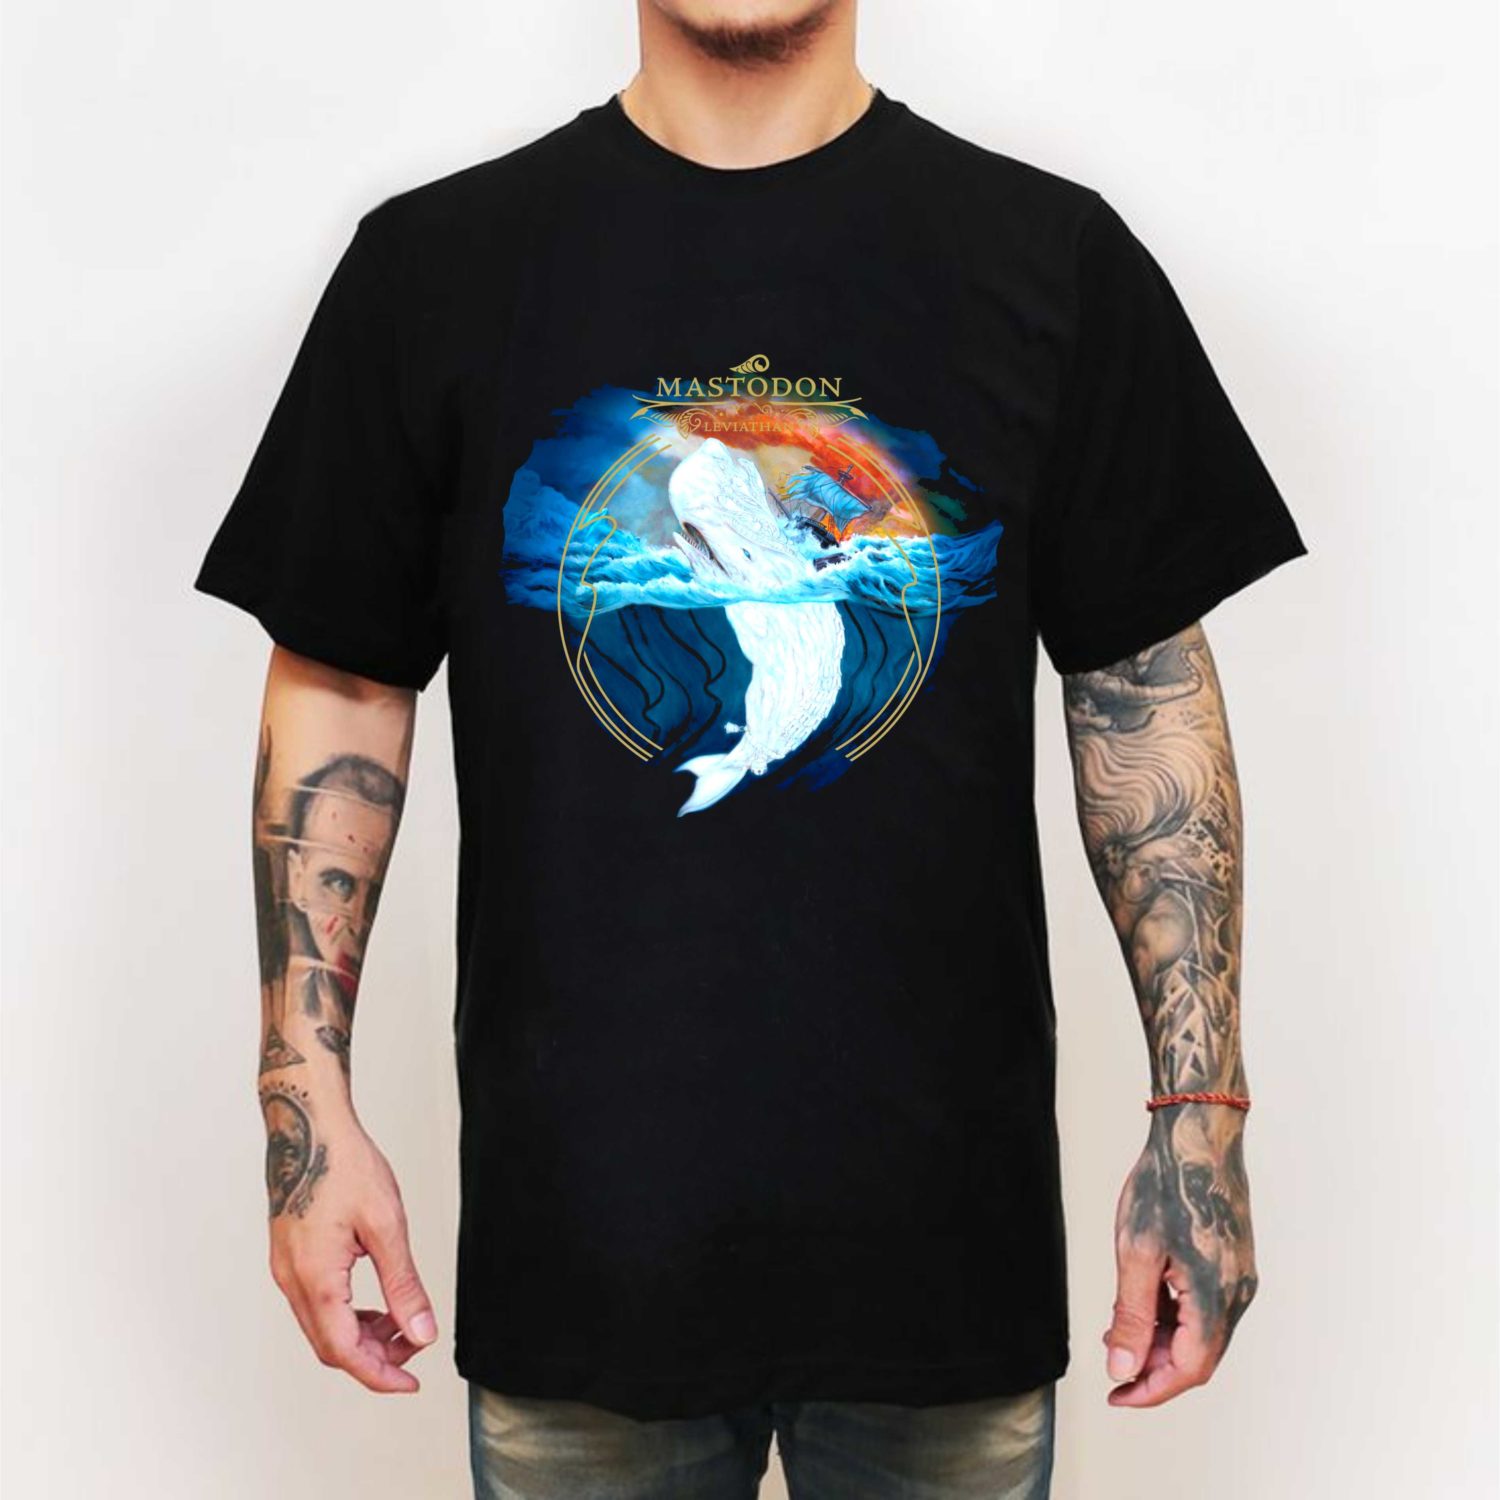 Mastodon Leviathan Black T-Shirt – Metal & Rock T-shirts and Accessories